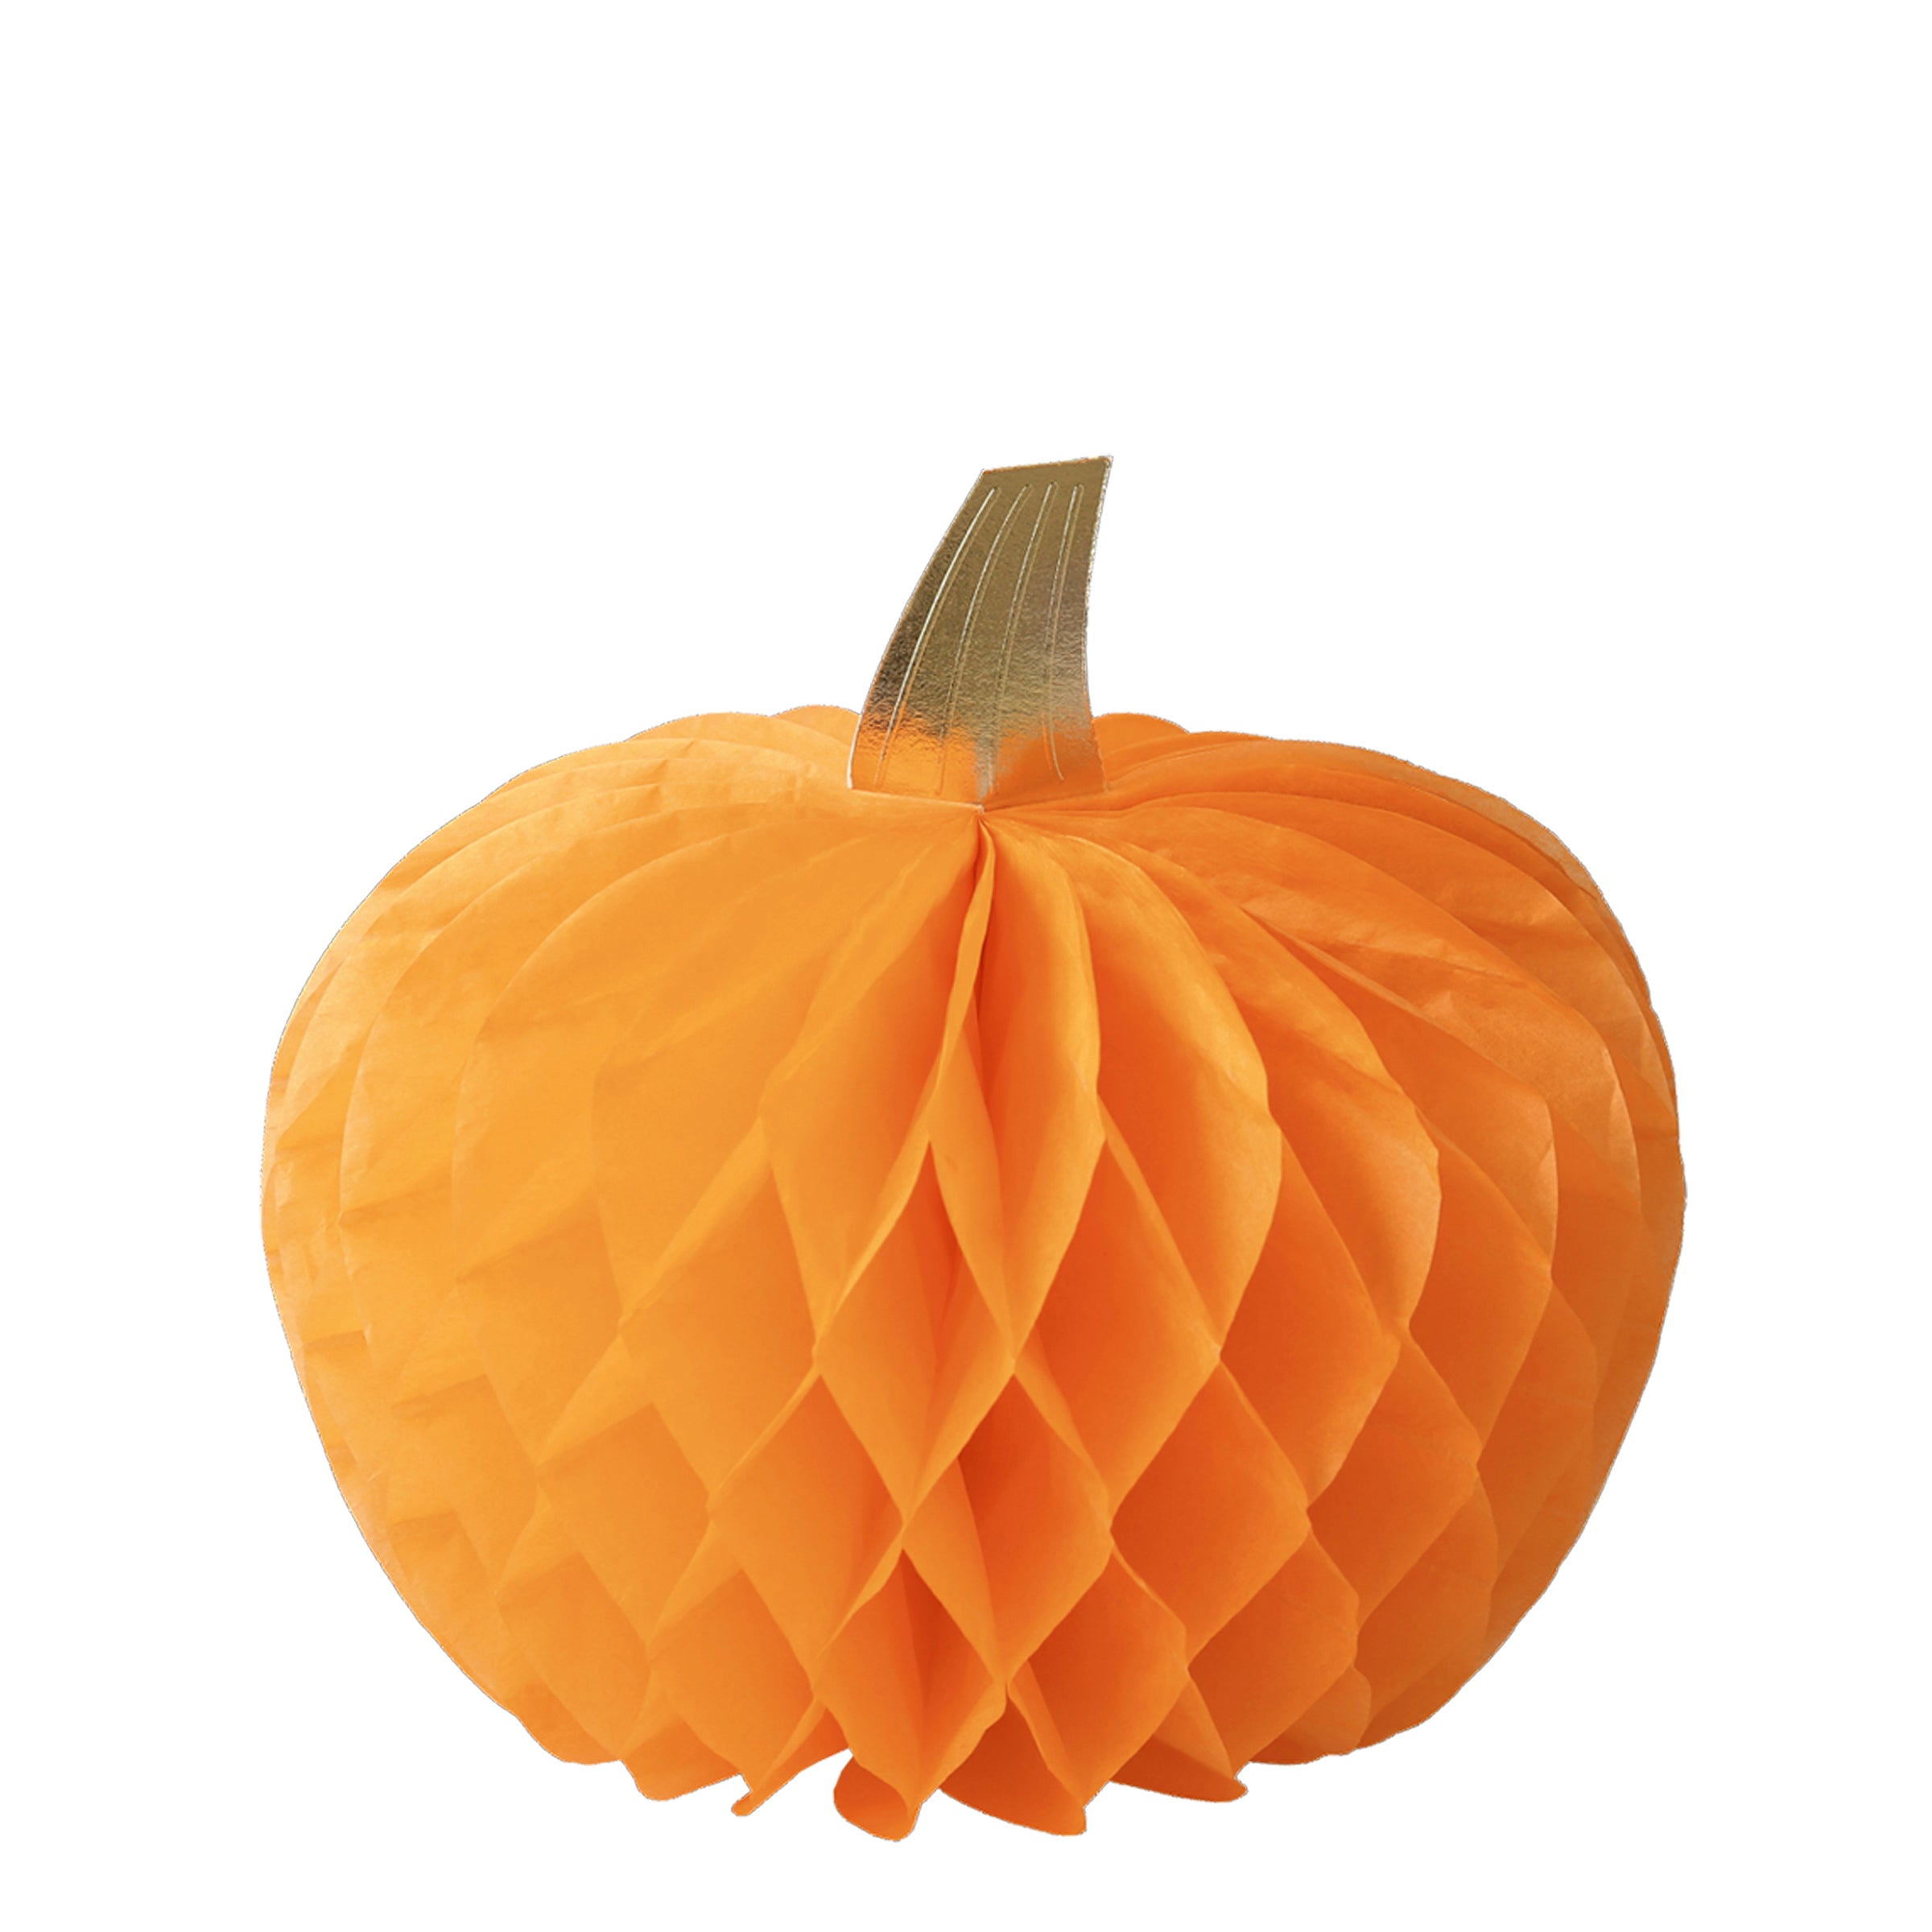 Our paper pumpkins make fabulous Halloween paper decorations.